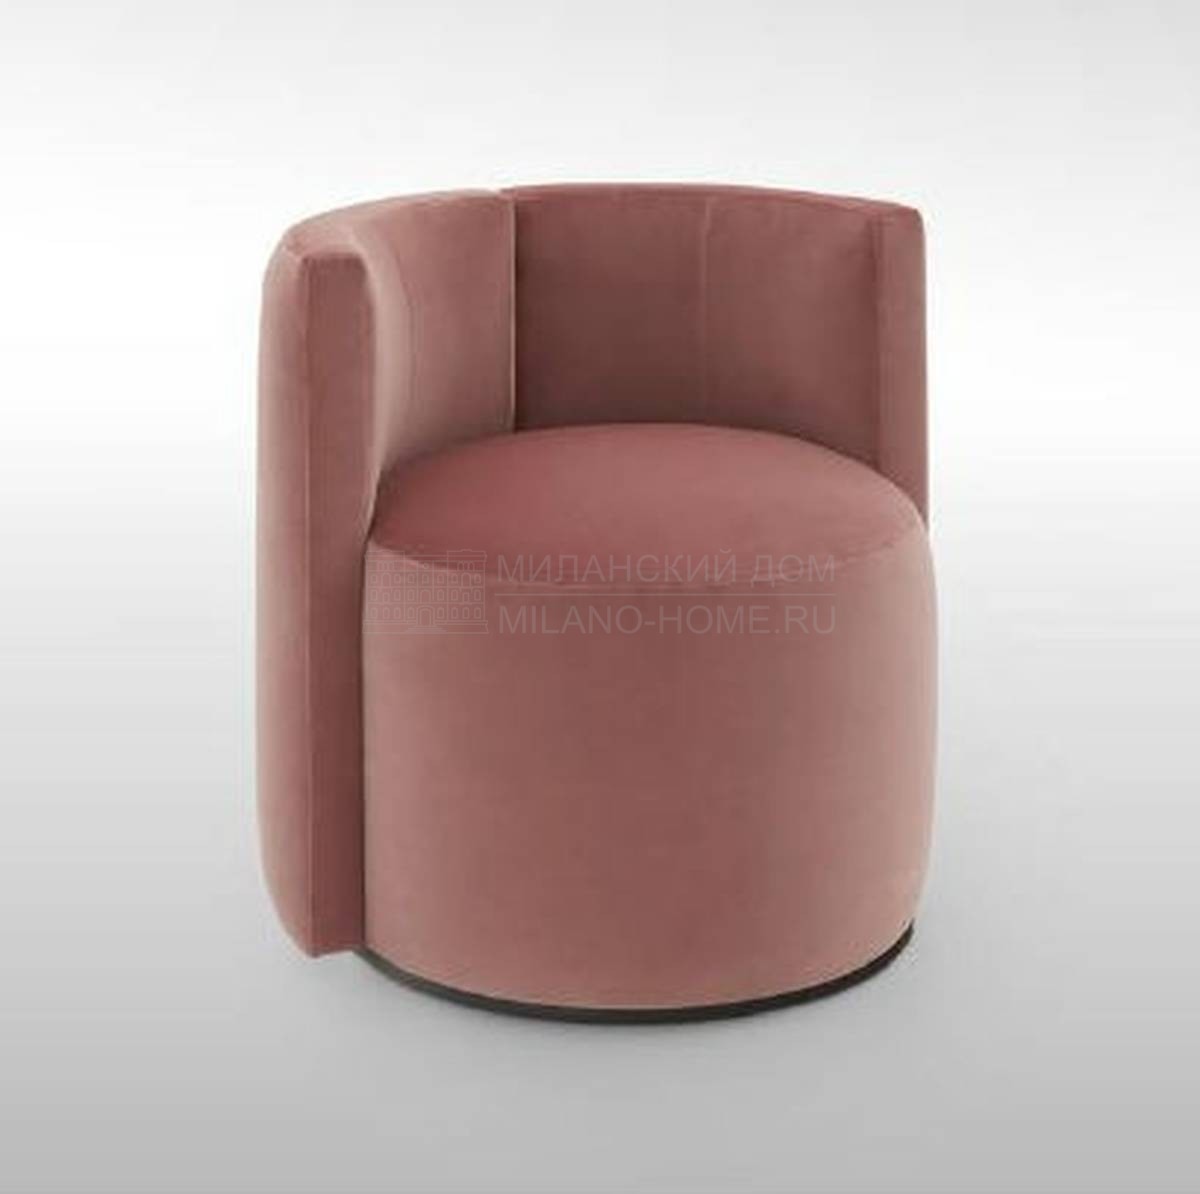 Кресло Loulou armchair из Италии фабрики FENDI Casa